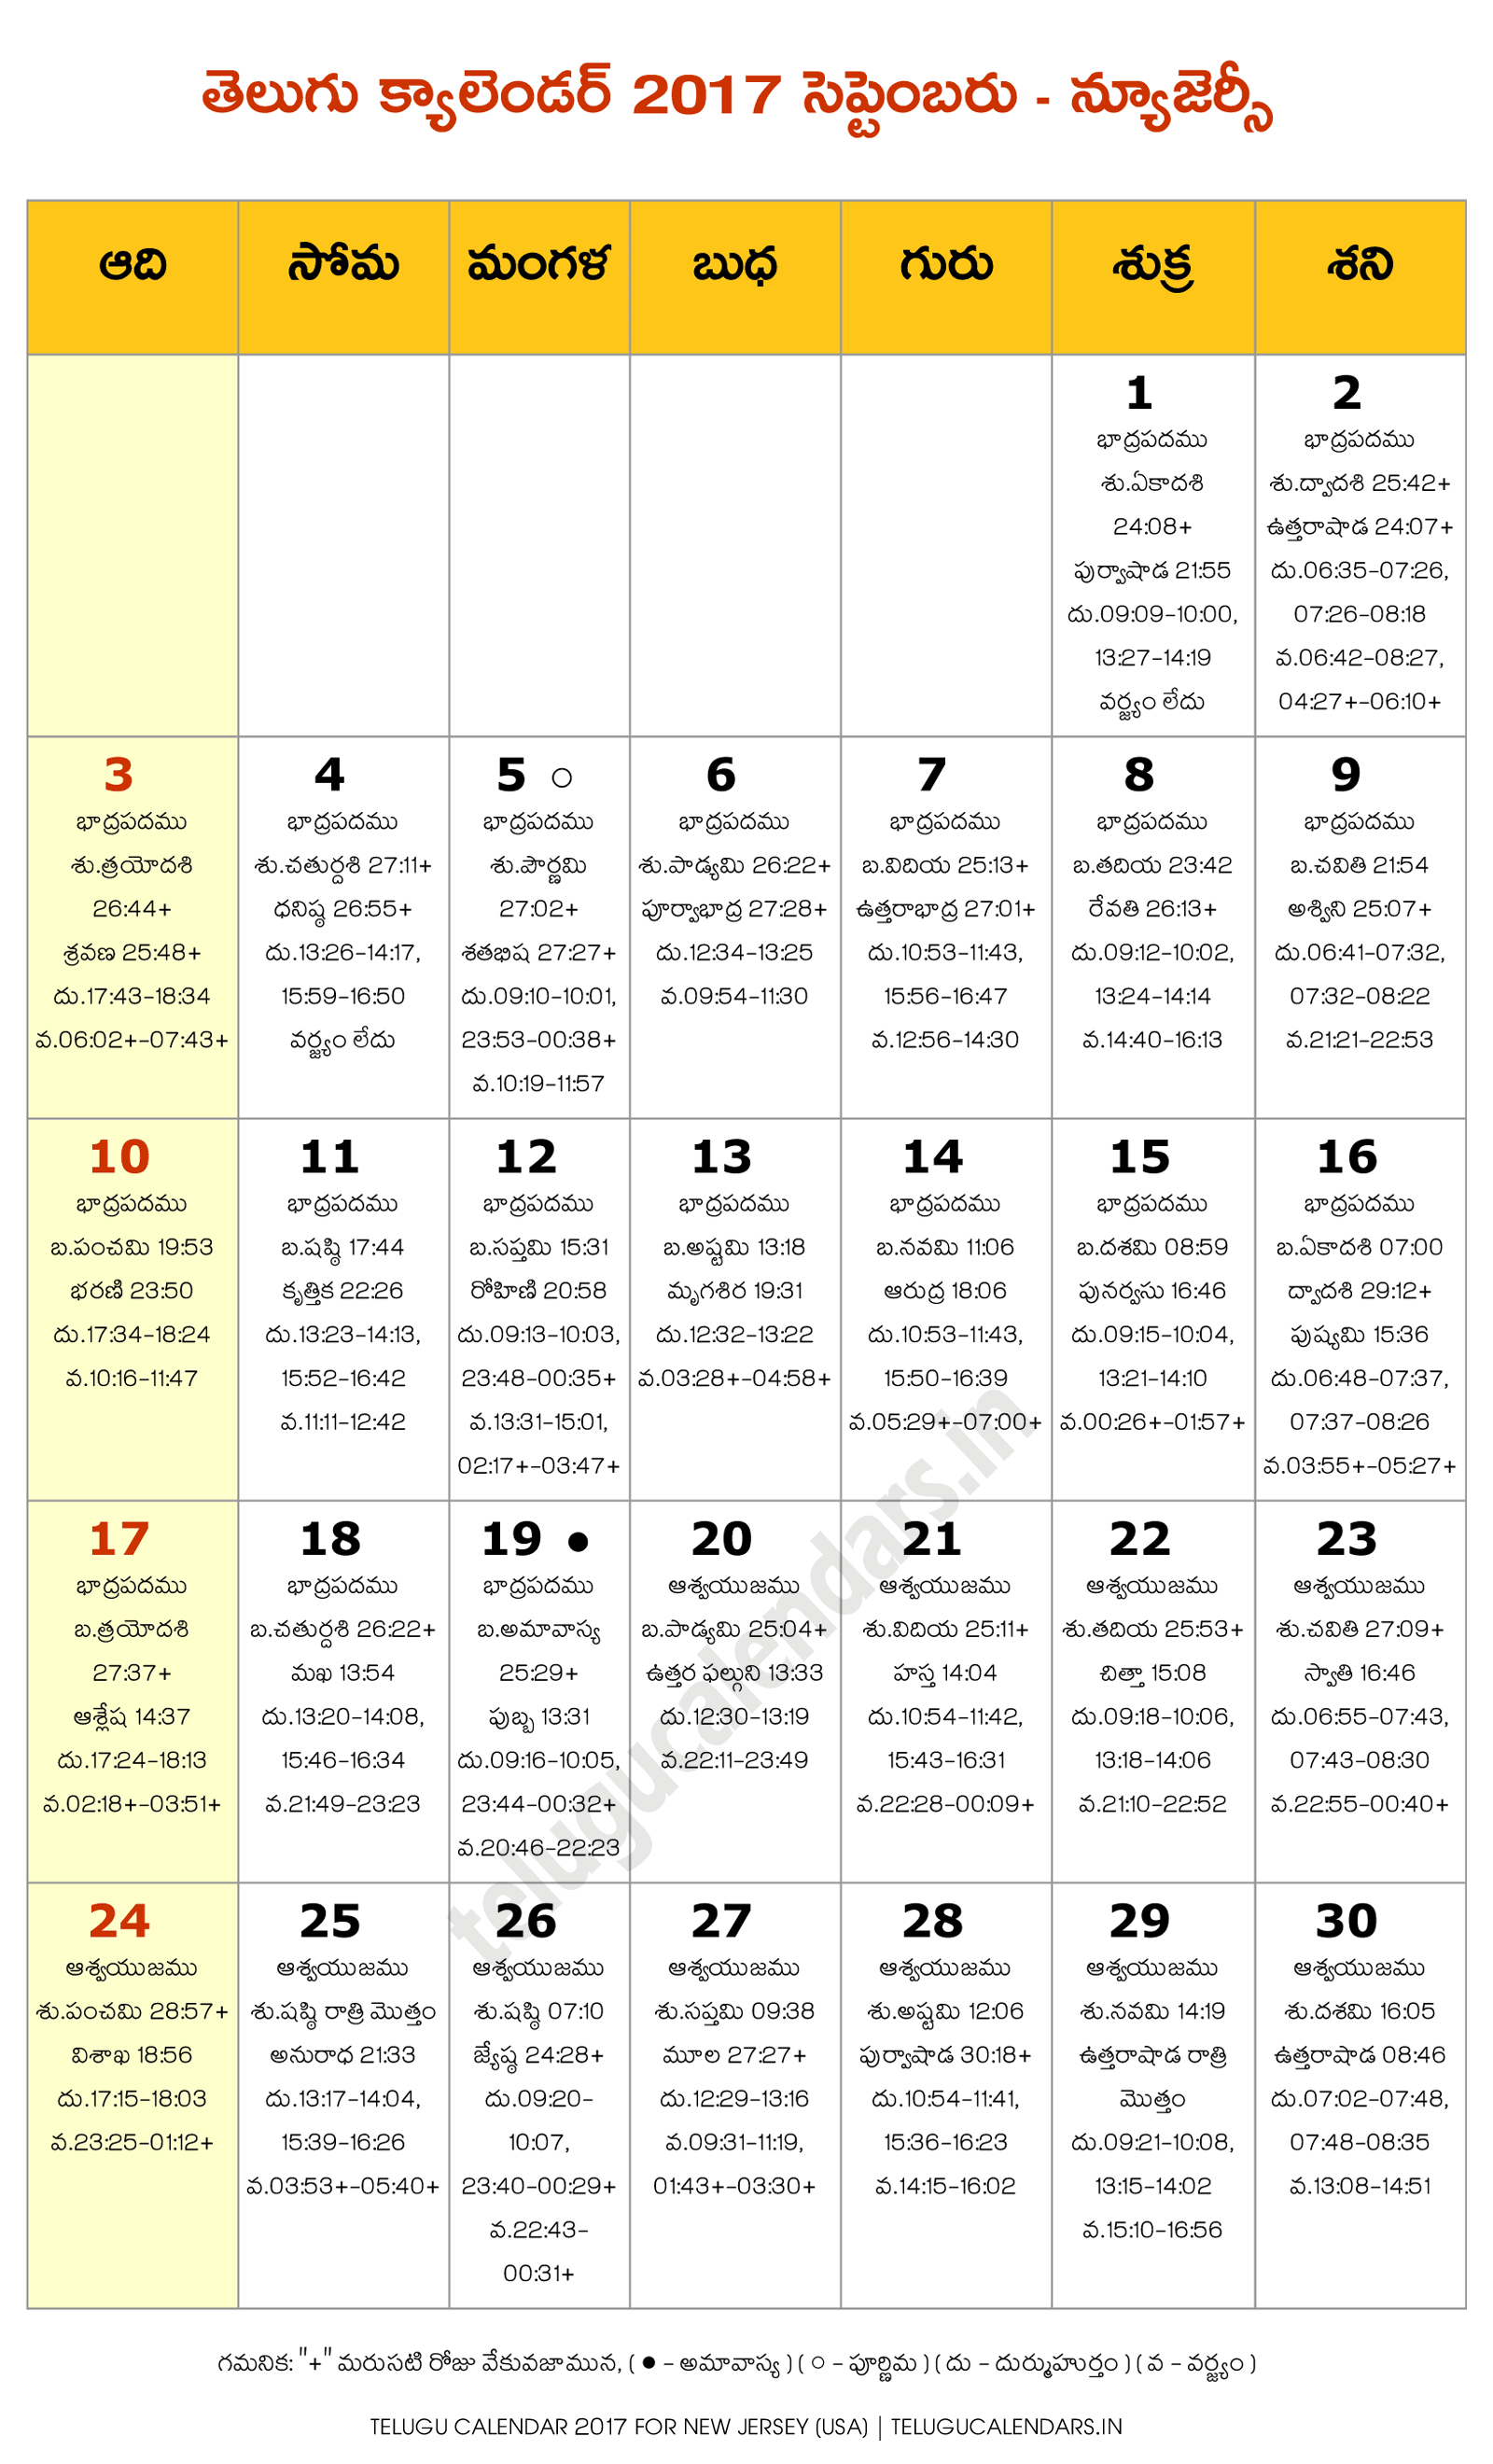 New Jersey 2017 September Telugu Calendar | Telugu Calendars